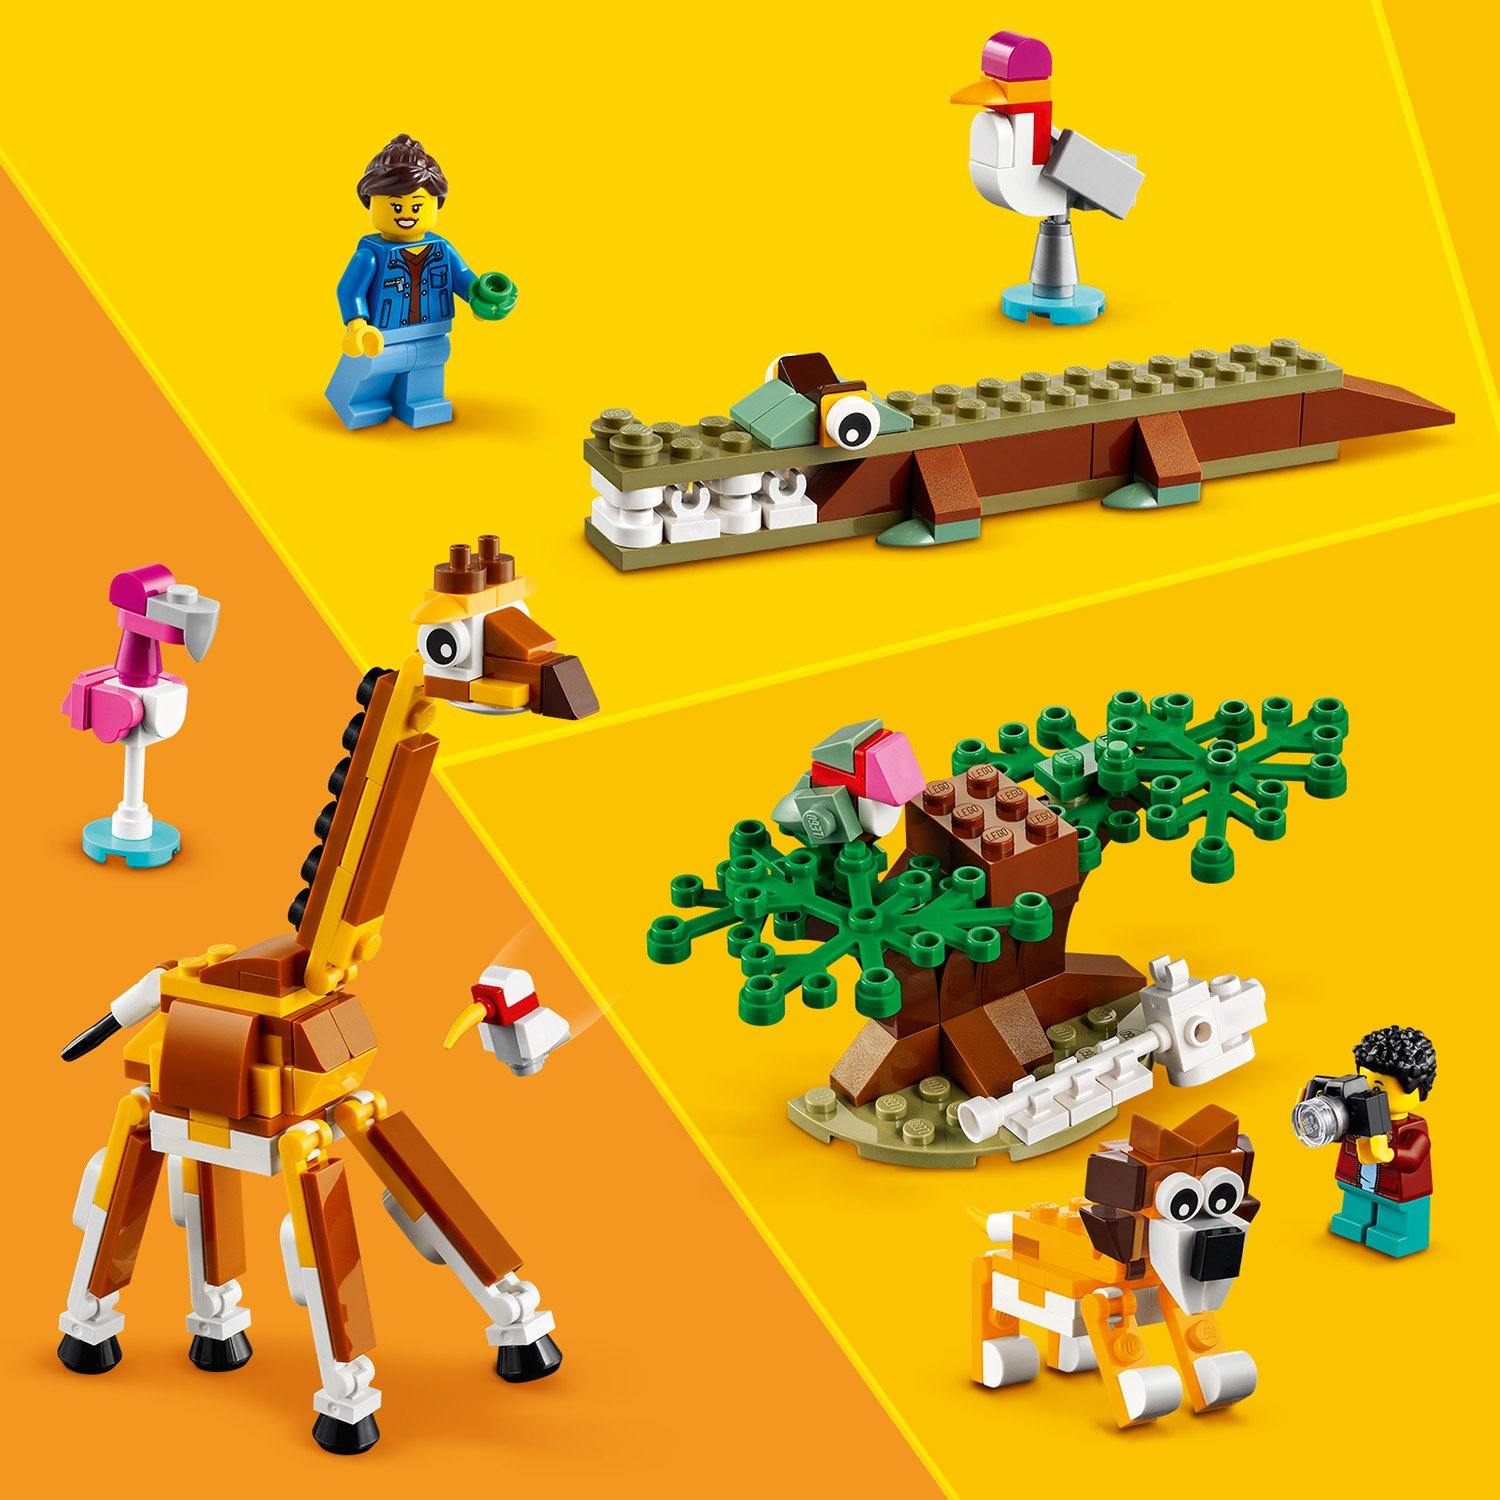 LEGO® Creator 3in1 Kućica na drvetu u divljini safarija - LEGO® Store Srbija